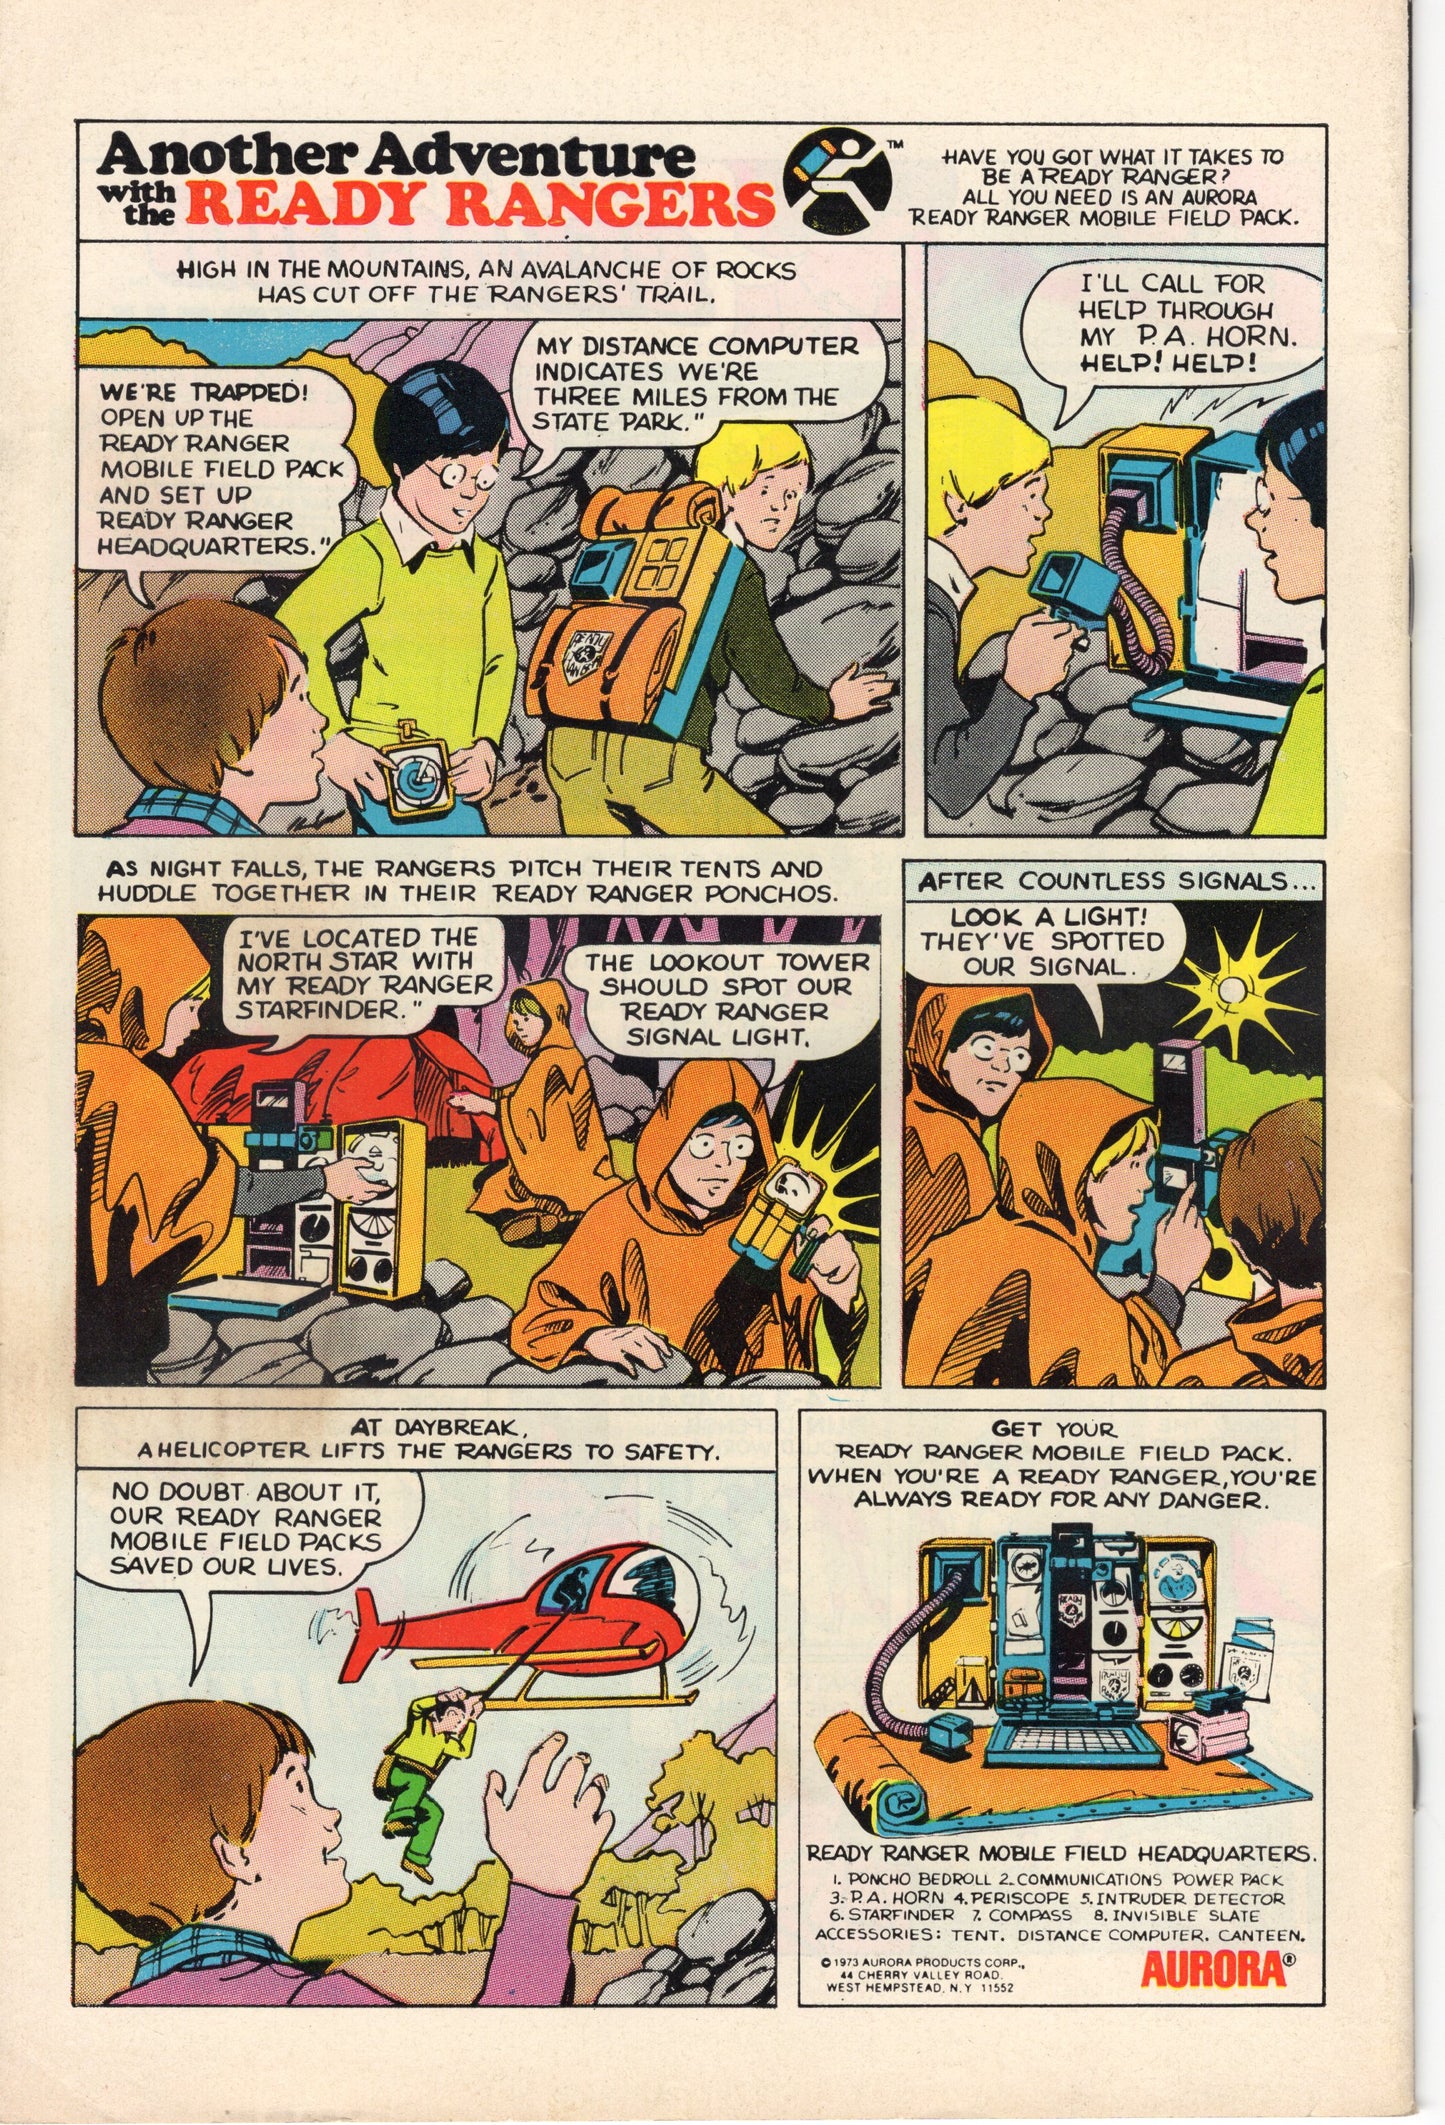 Superman - Issue #271 (Jan., 1974 - DC Comics) FN+